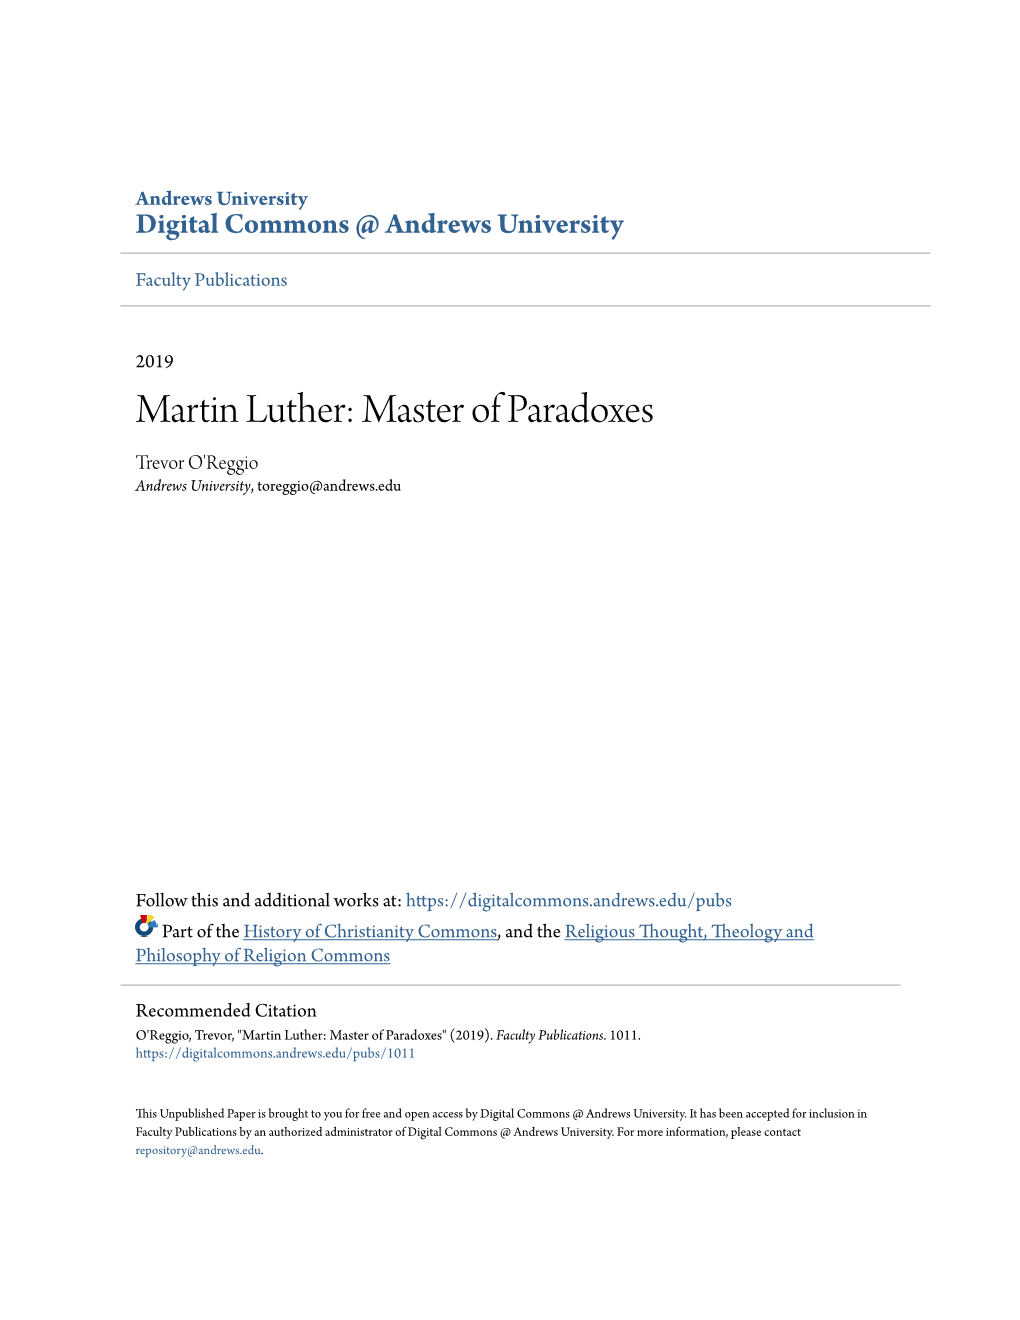 Martin Luther: Master of Paradoxes Trevor O'reggio Andrews University, Toreggio@Andrews.Edu